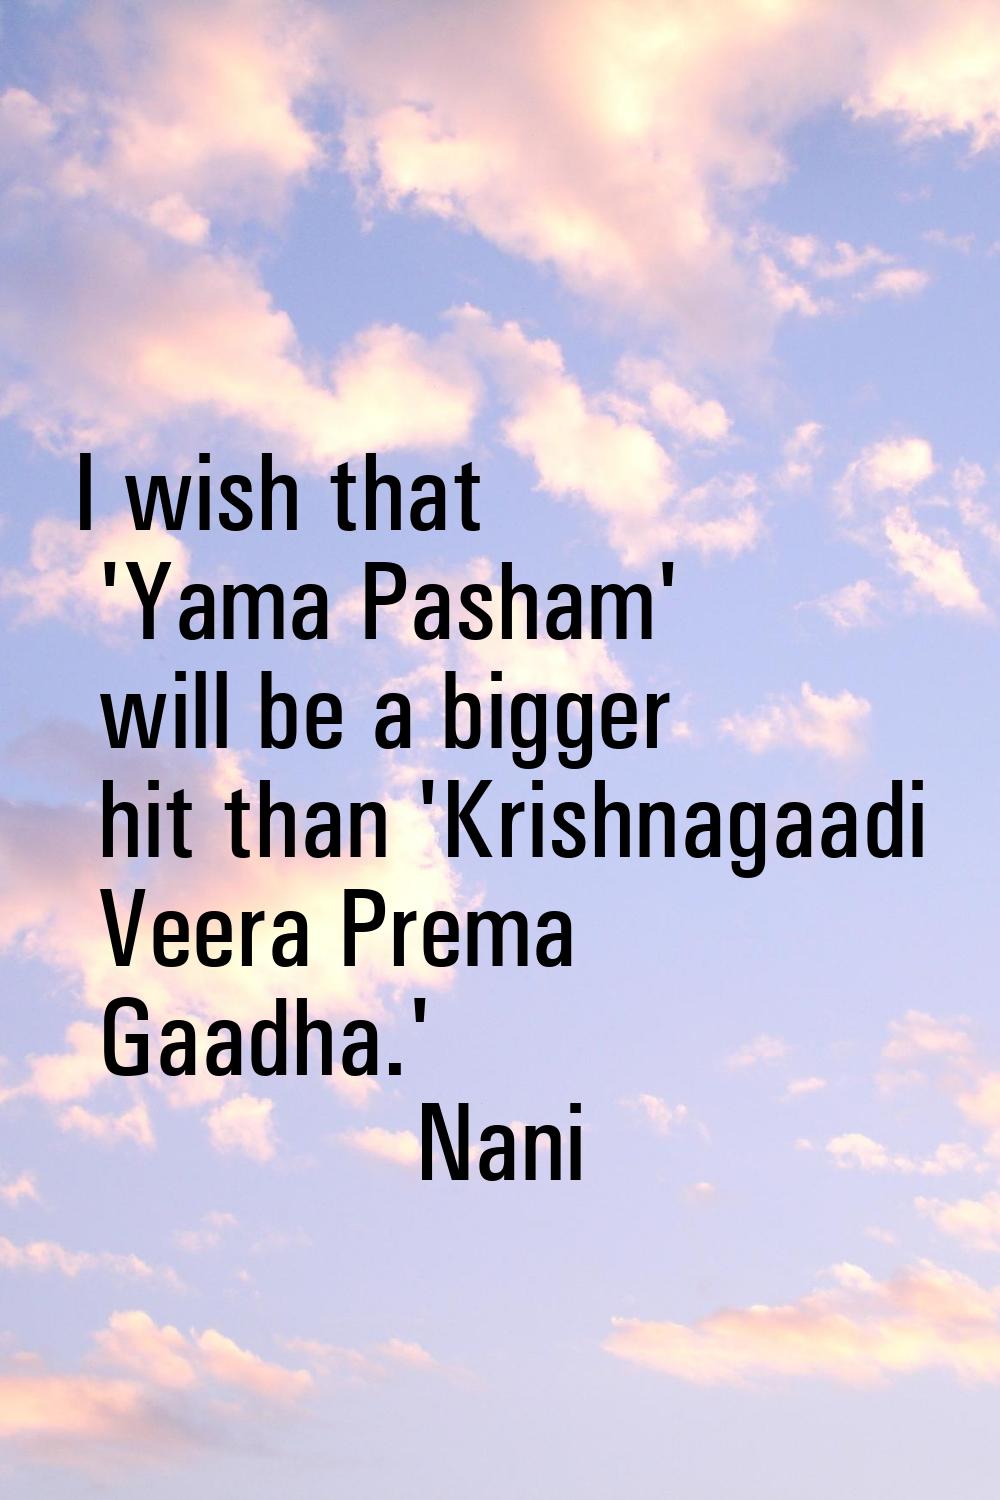 I wish that 'Yama Pasham' will be a bigger hit than 'Krishnagaadi Veera Prema Gaadha.'